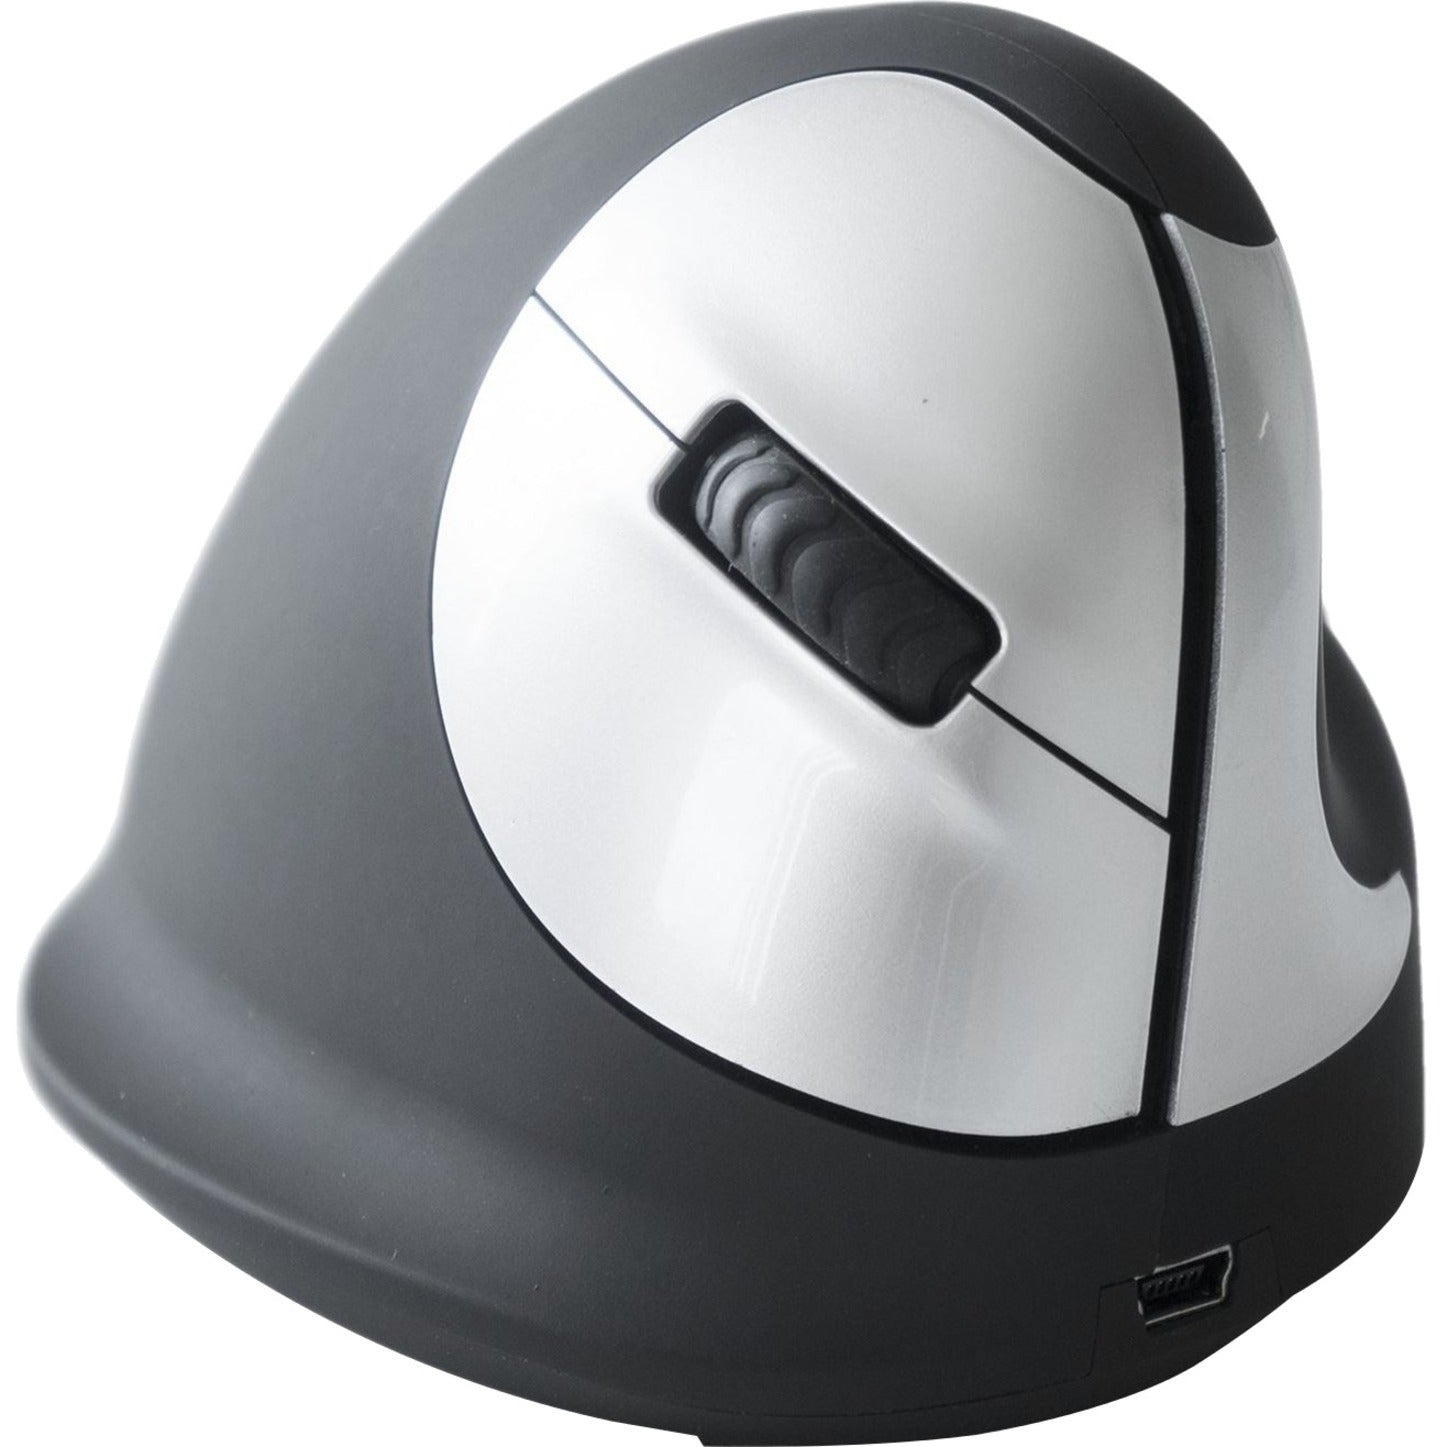 R-Go Tools Wireless Vertical Ergonomic Mouse, Medium, Right Hand, Black